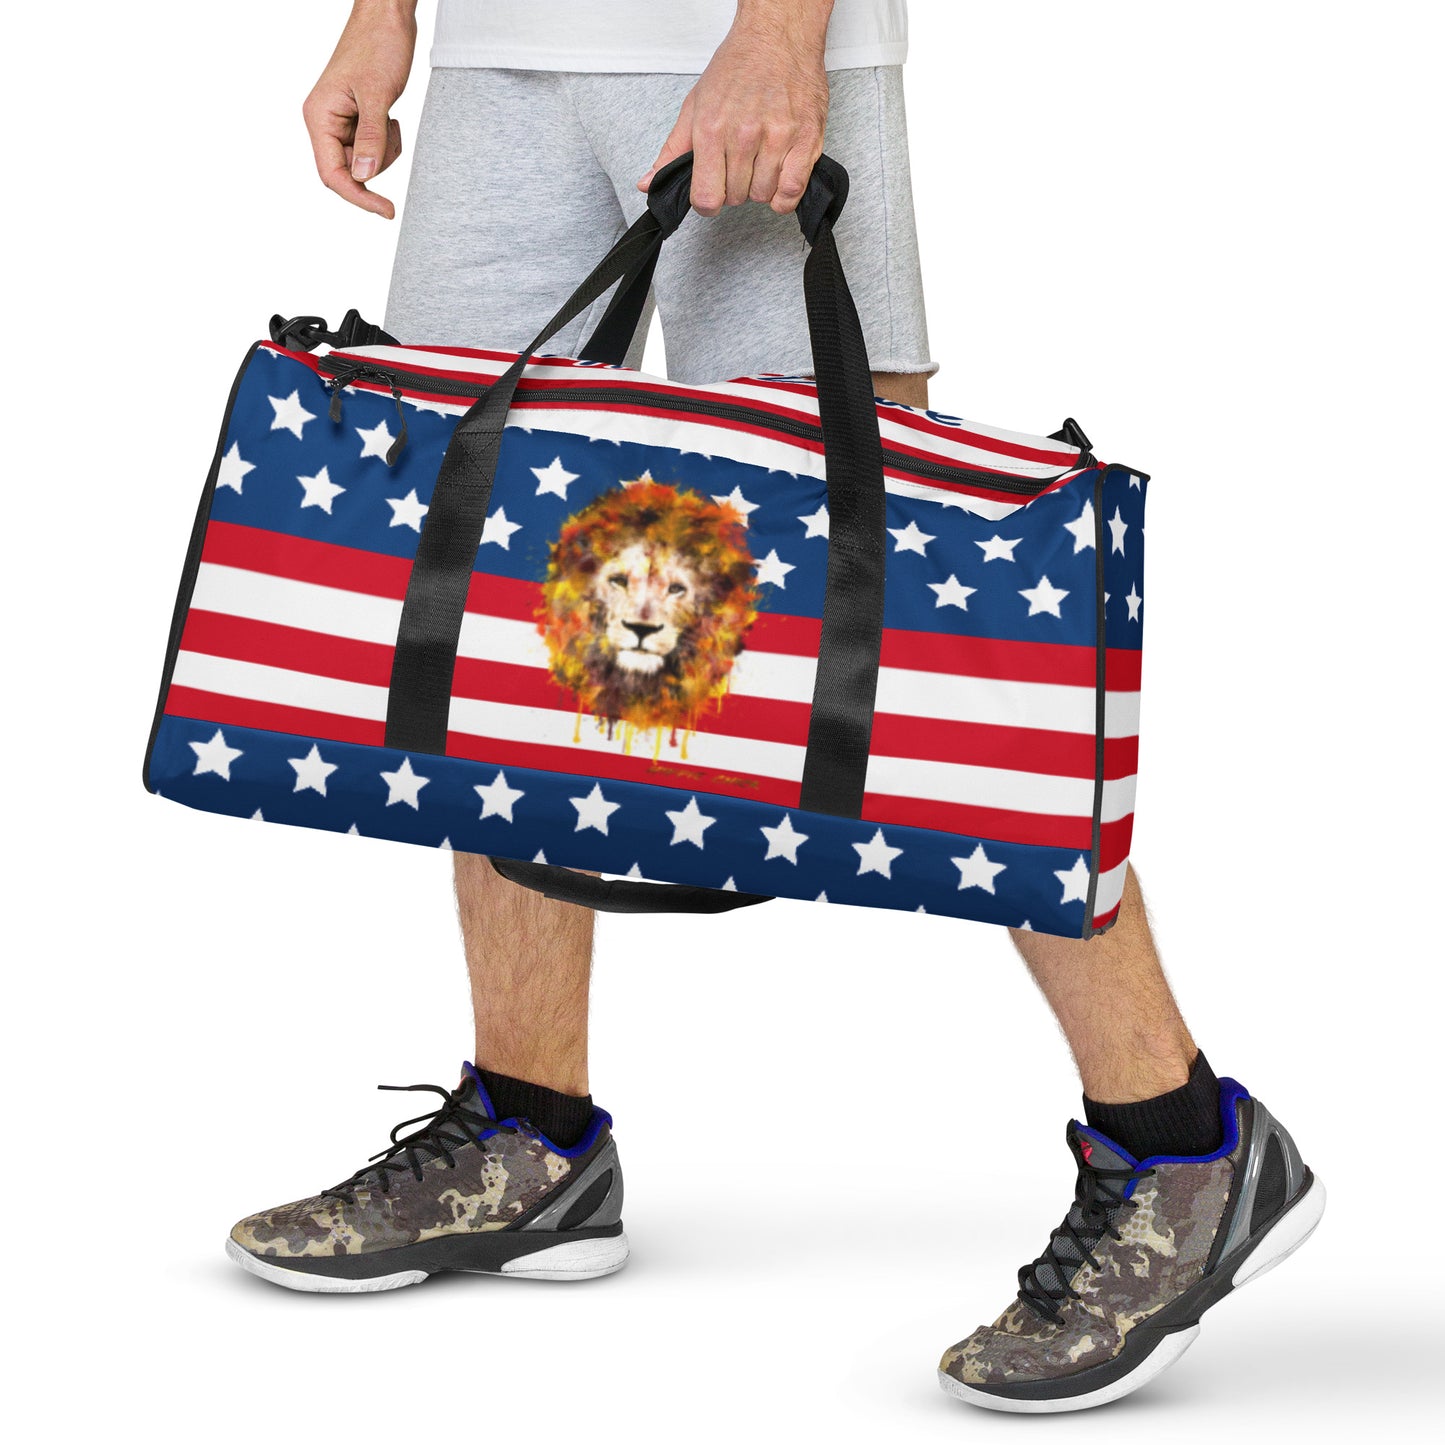 USA Duffle Bag - OG Hippie Dude